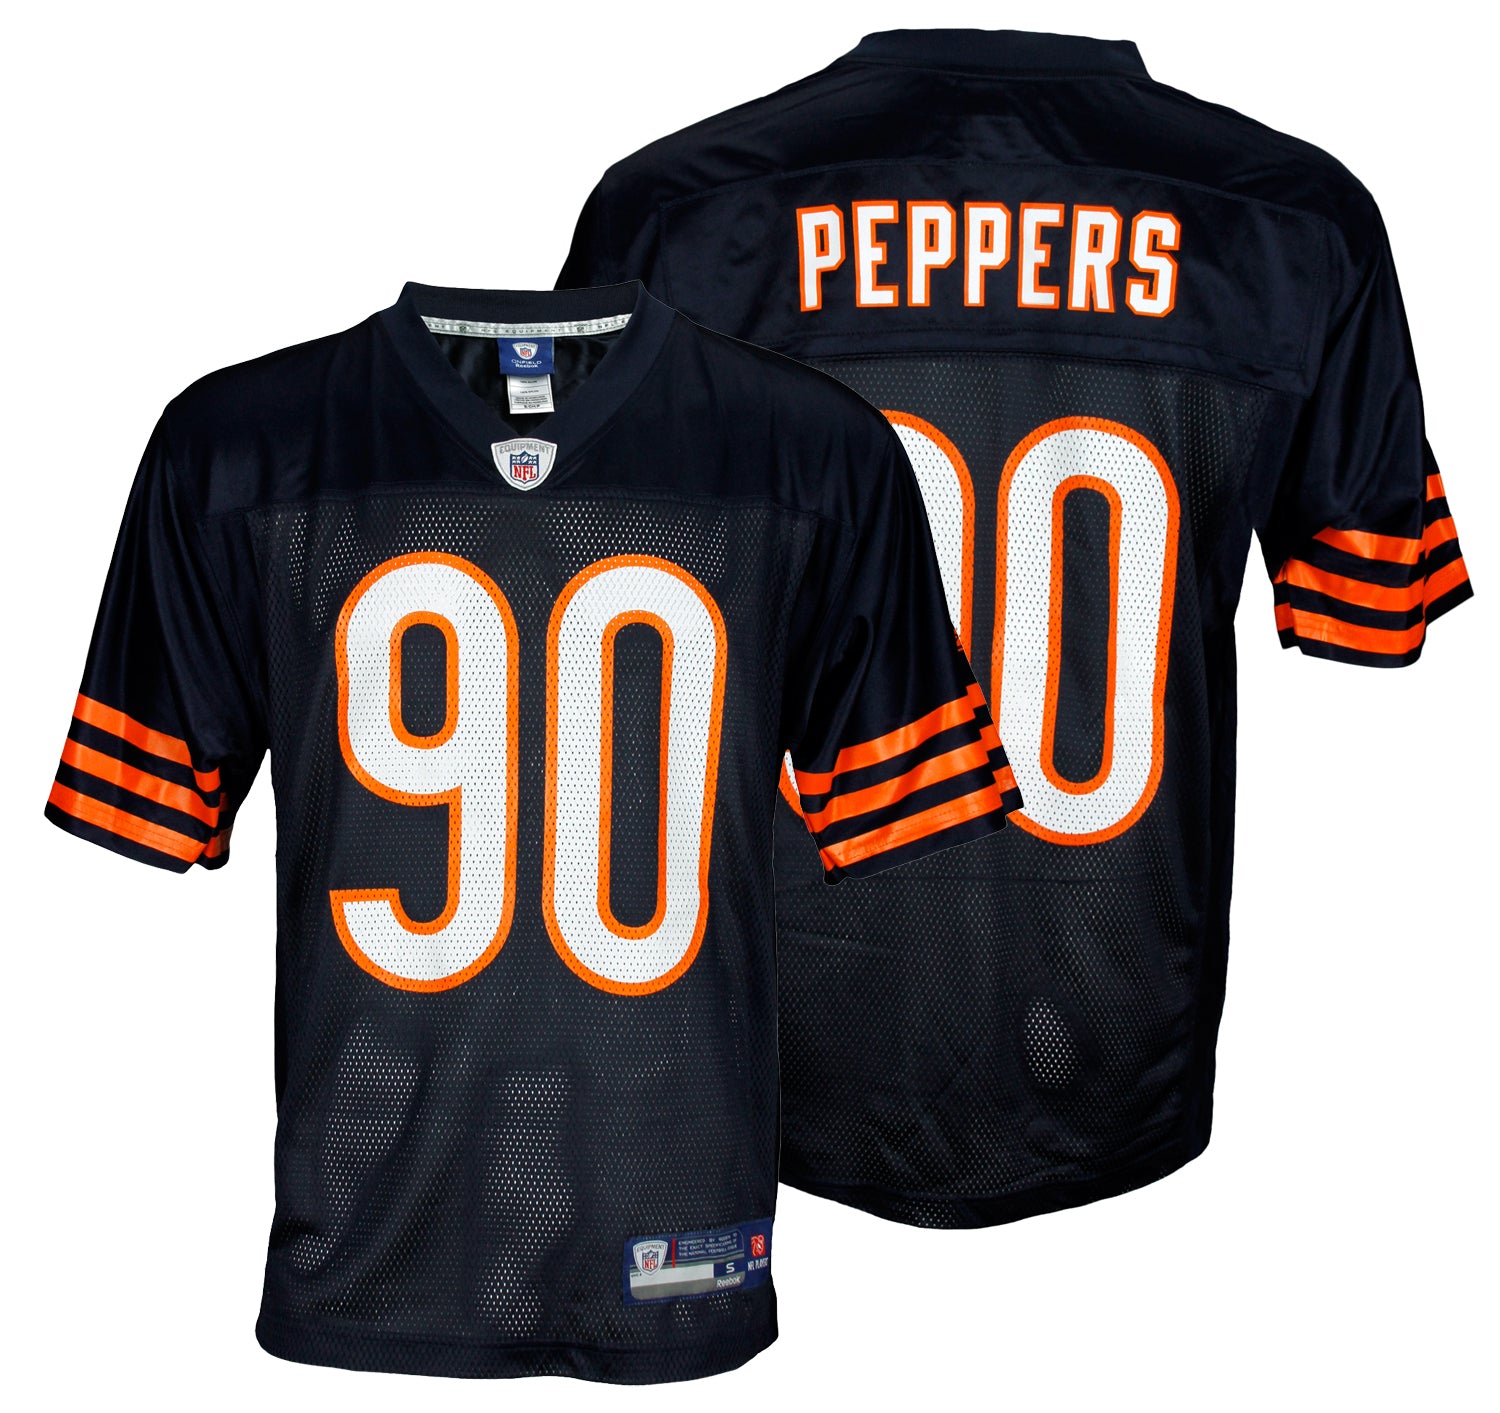 Reebok Mens NFL Chicago Bears JULIUS PEPPERS # 90 Replica Jersey